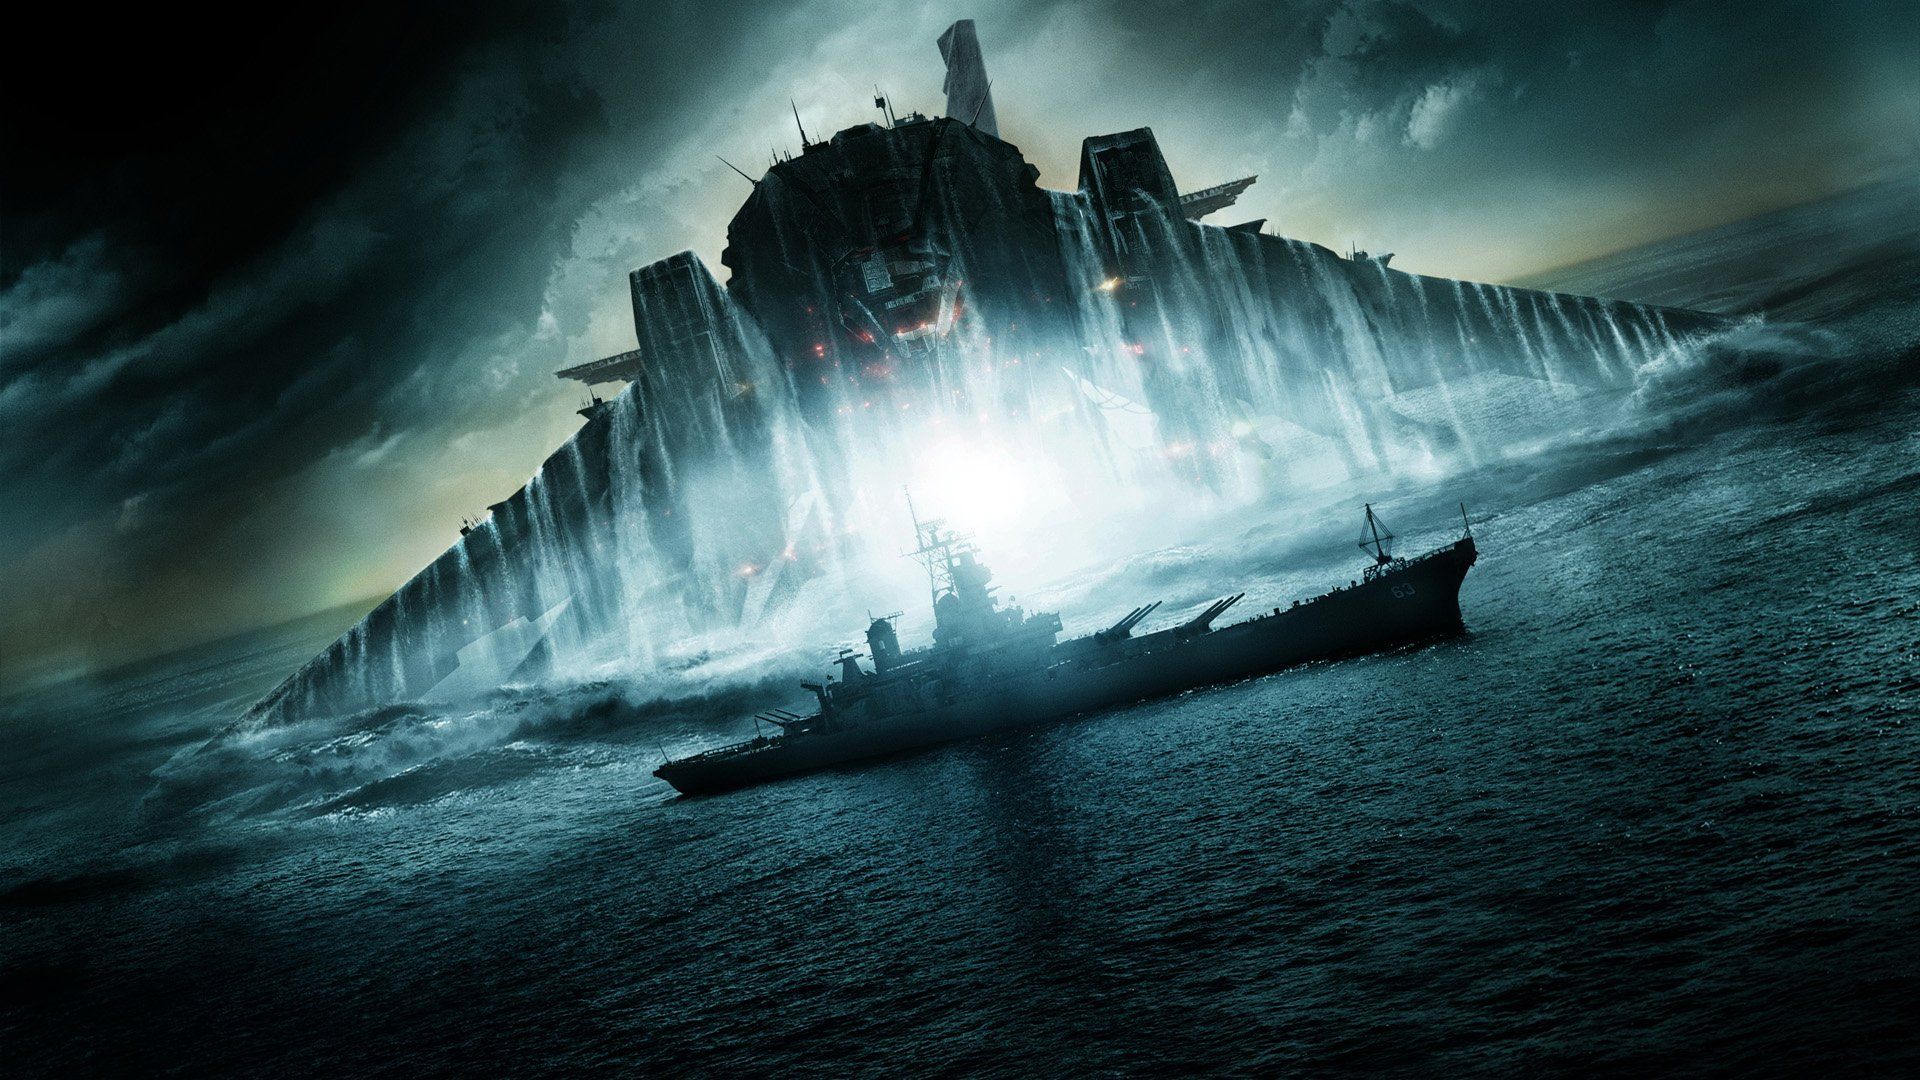 Battleship HD Wallpaper and Background Image